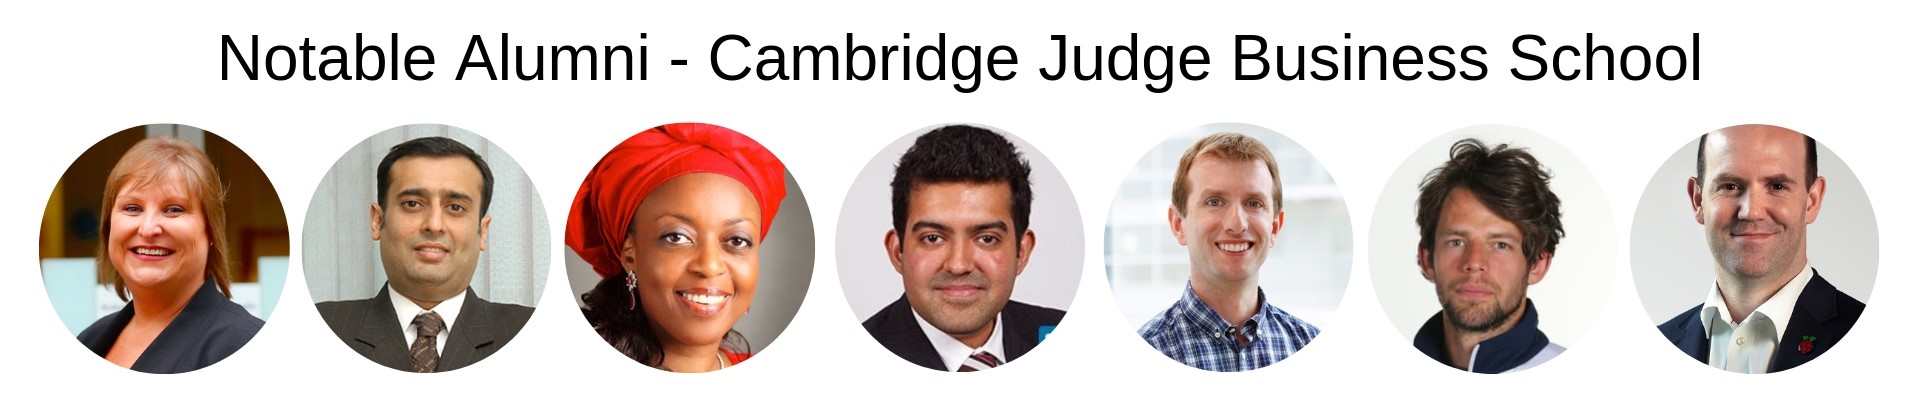 Cambridge Judge Business School MBA Program - Notable Alumni